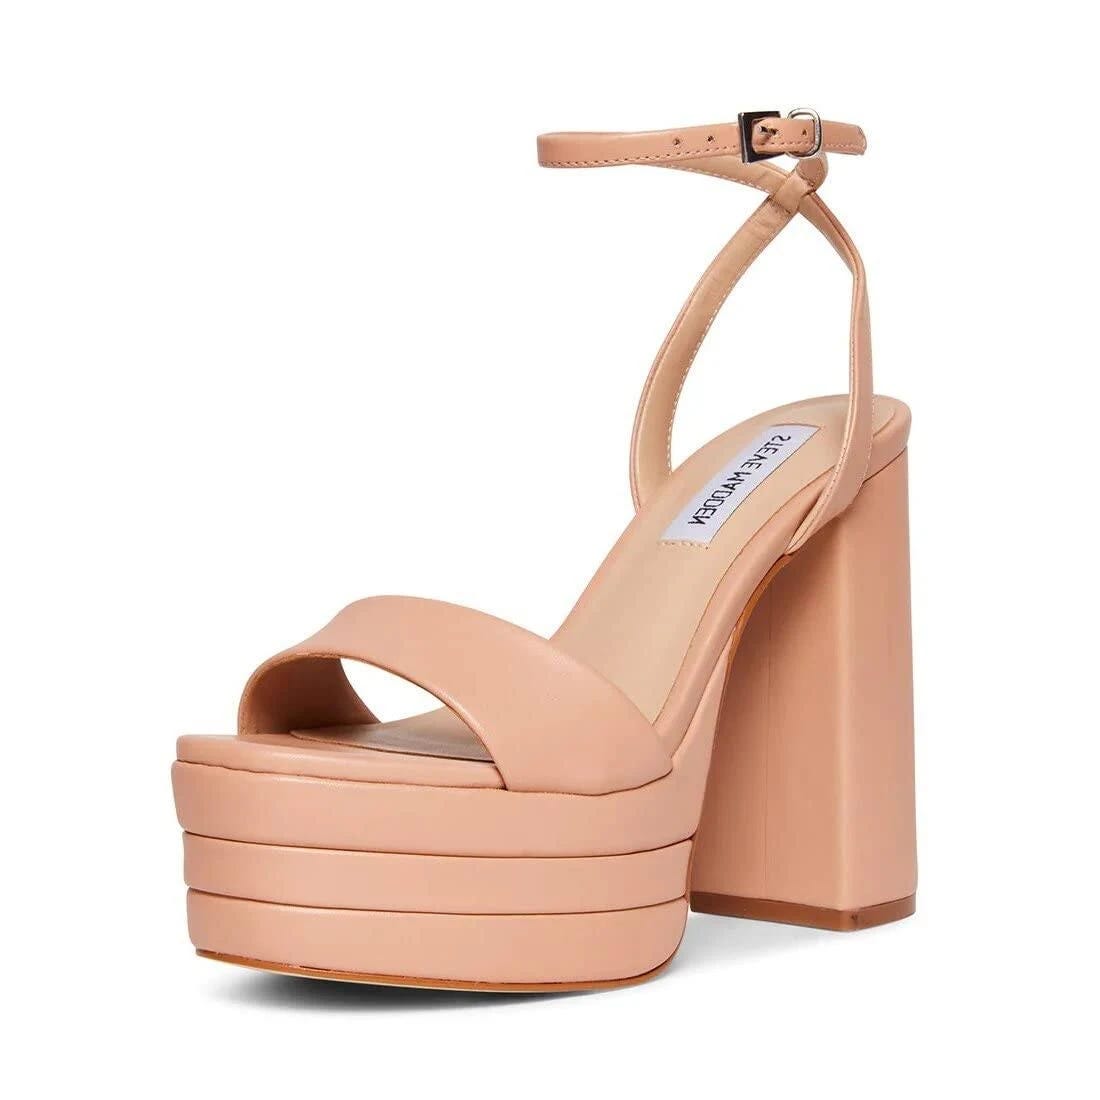 Fashionable Nude Platform Sandal with Ankle Strap | Image